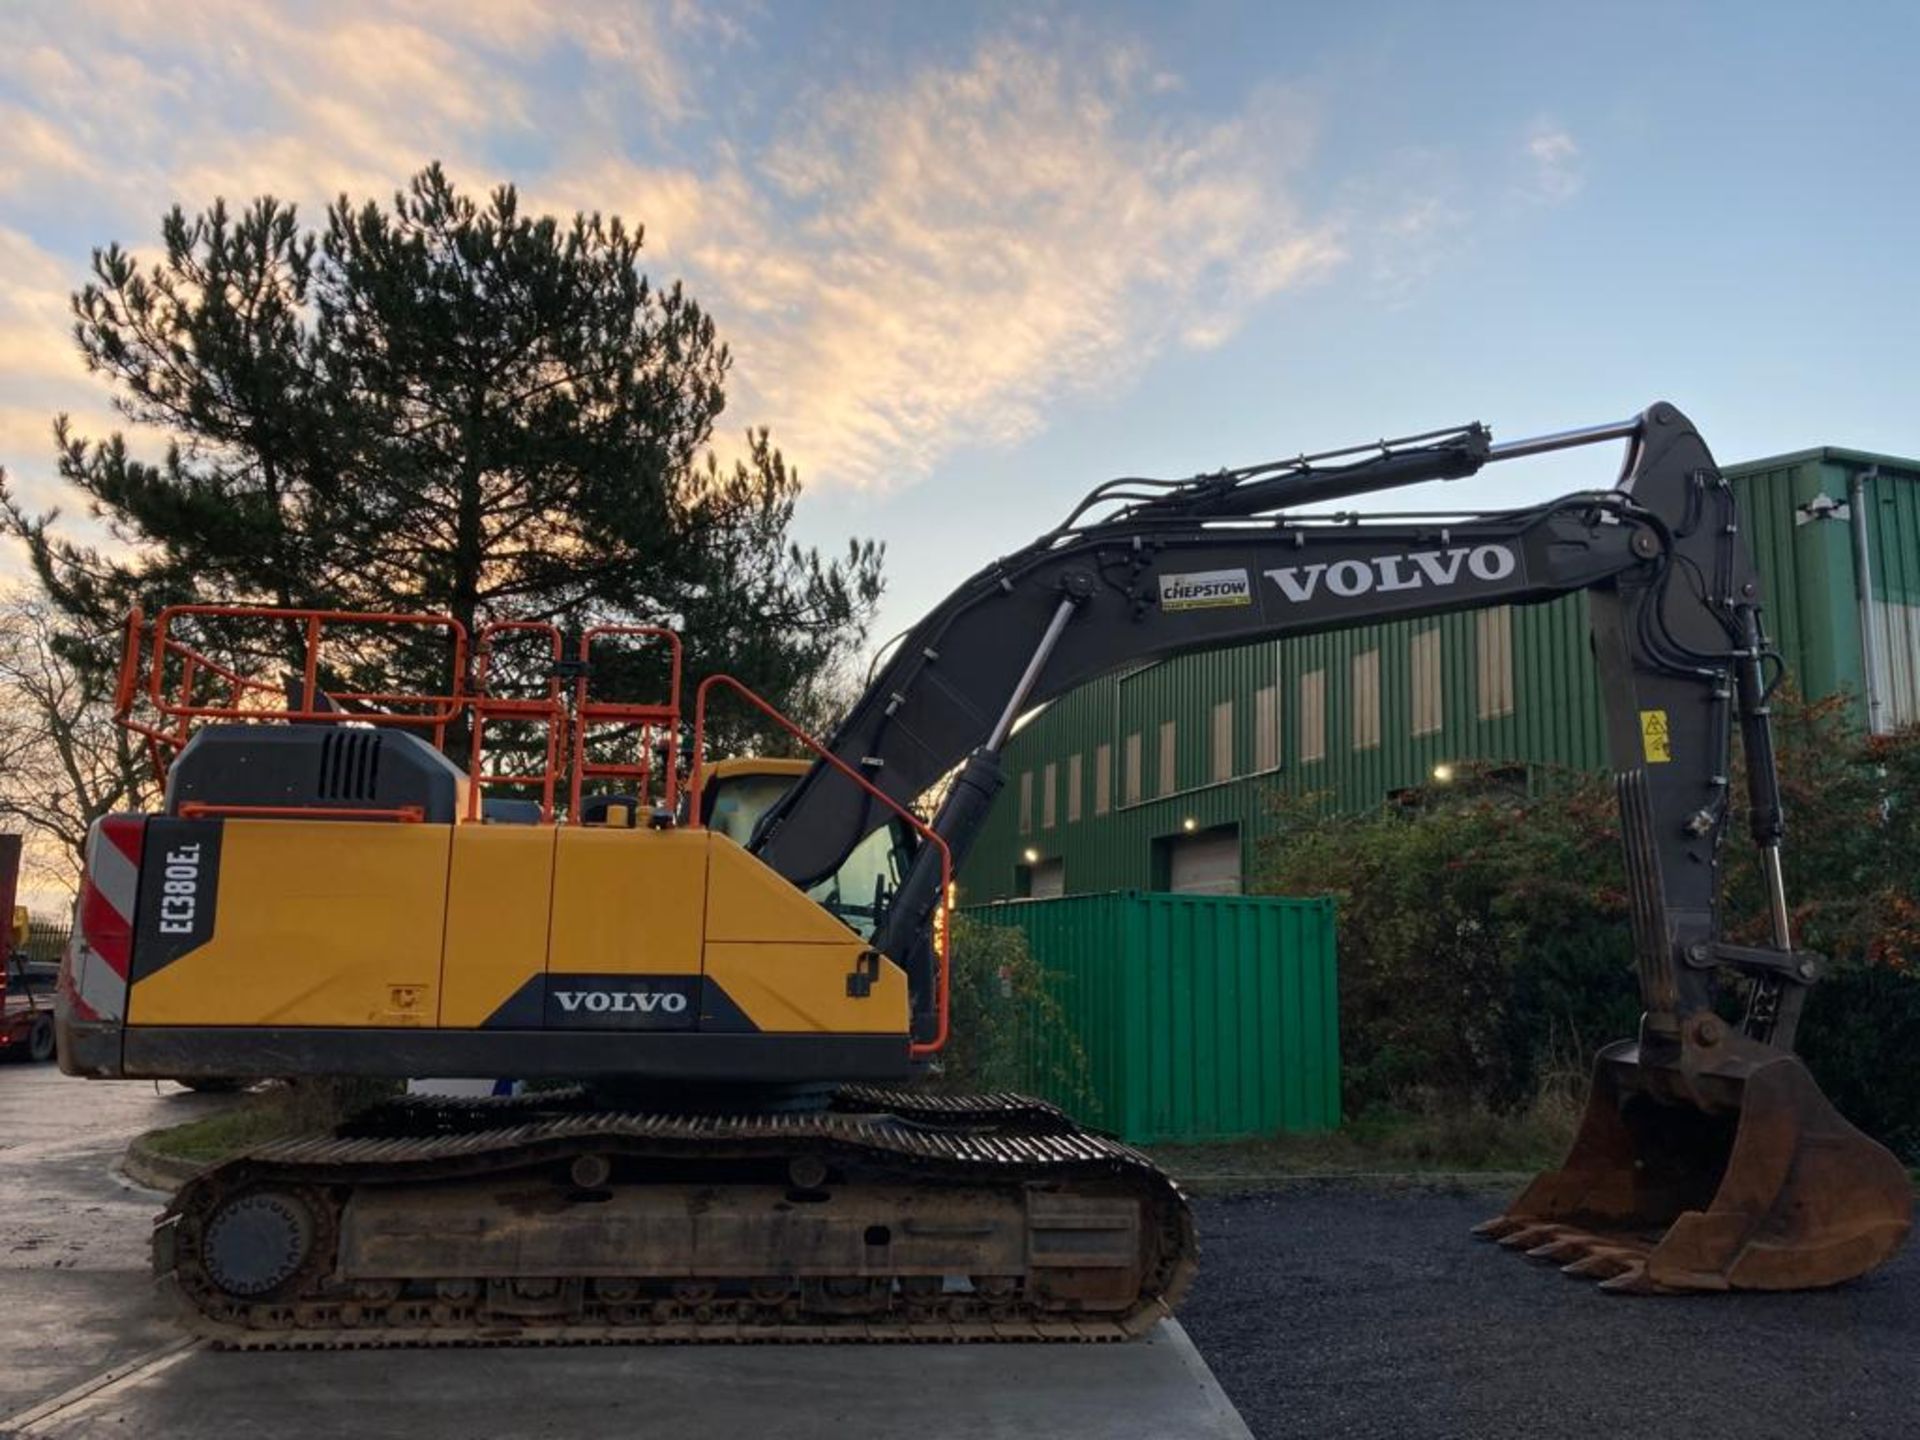 Direct from Volvo Main Dealer, 2018 (EC380EL) Tracked Excavator - Image 12 of 25